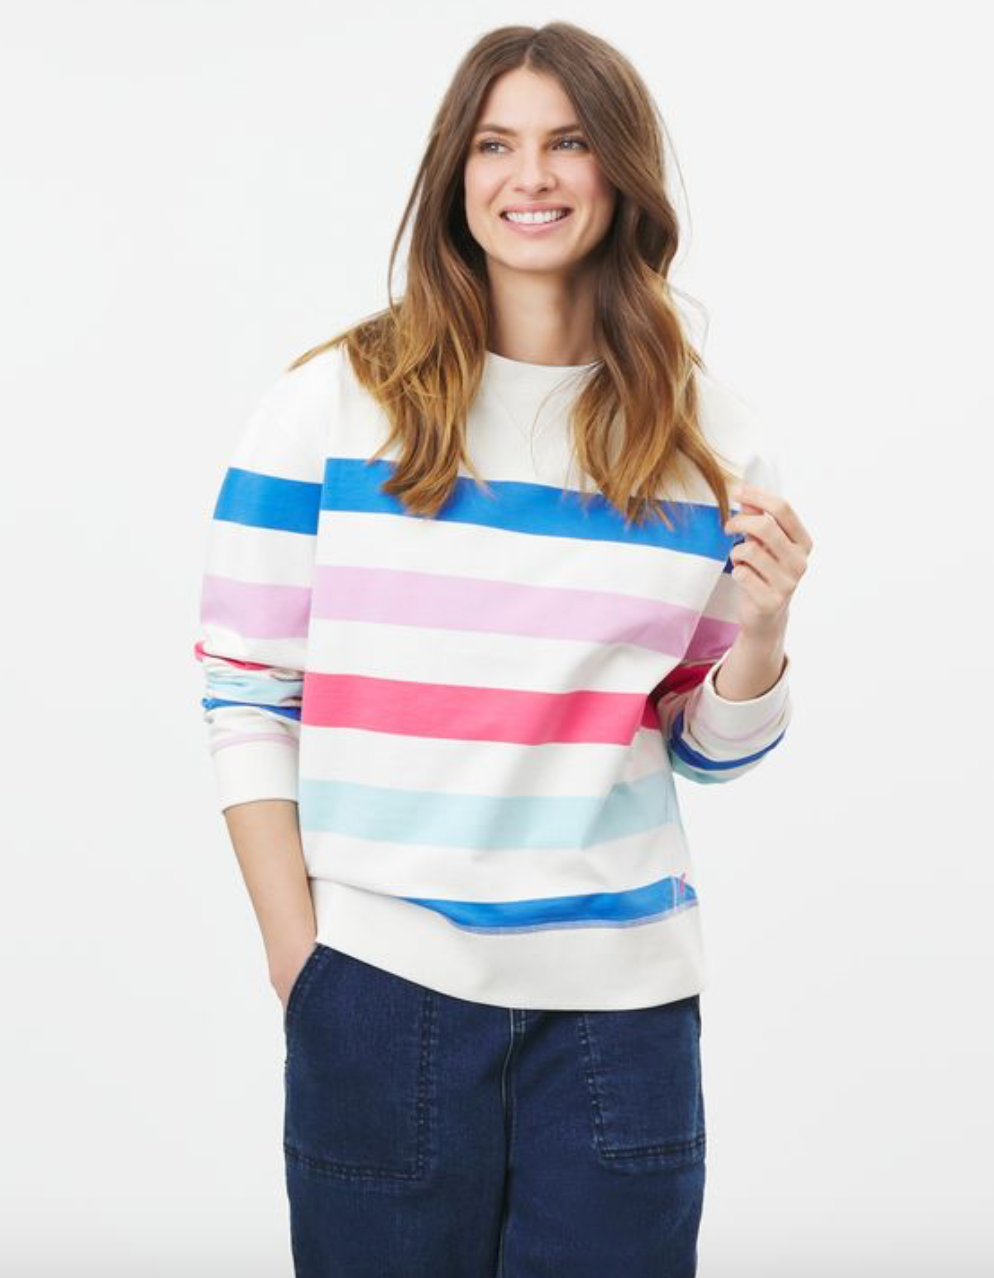 Joules - Women's Monique Crew Neck Sweatshirt - Multi Stripe